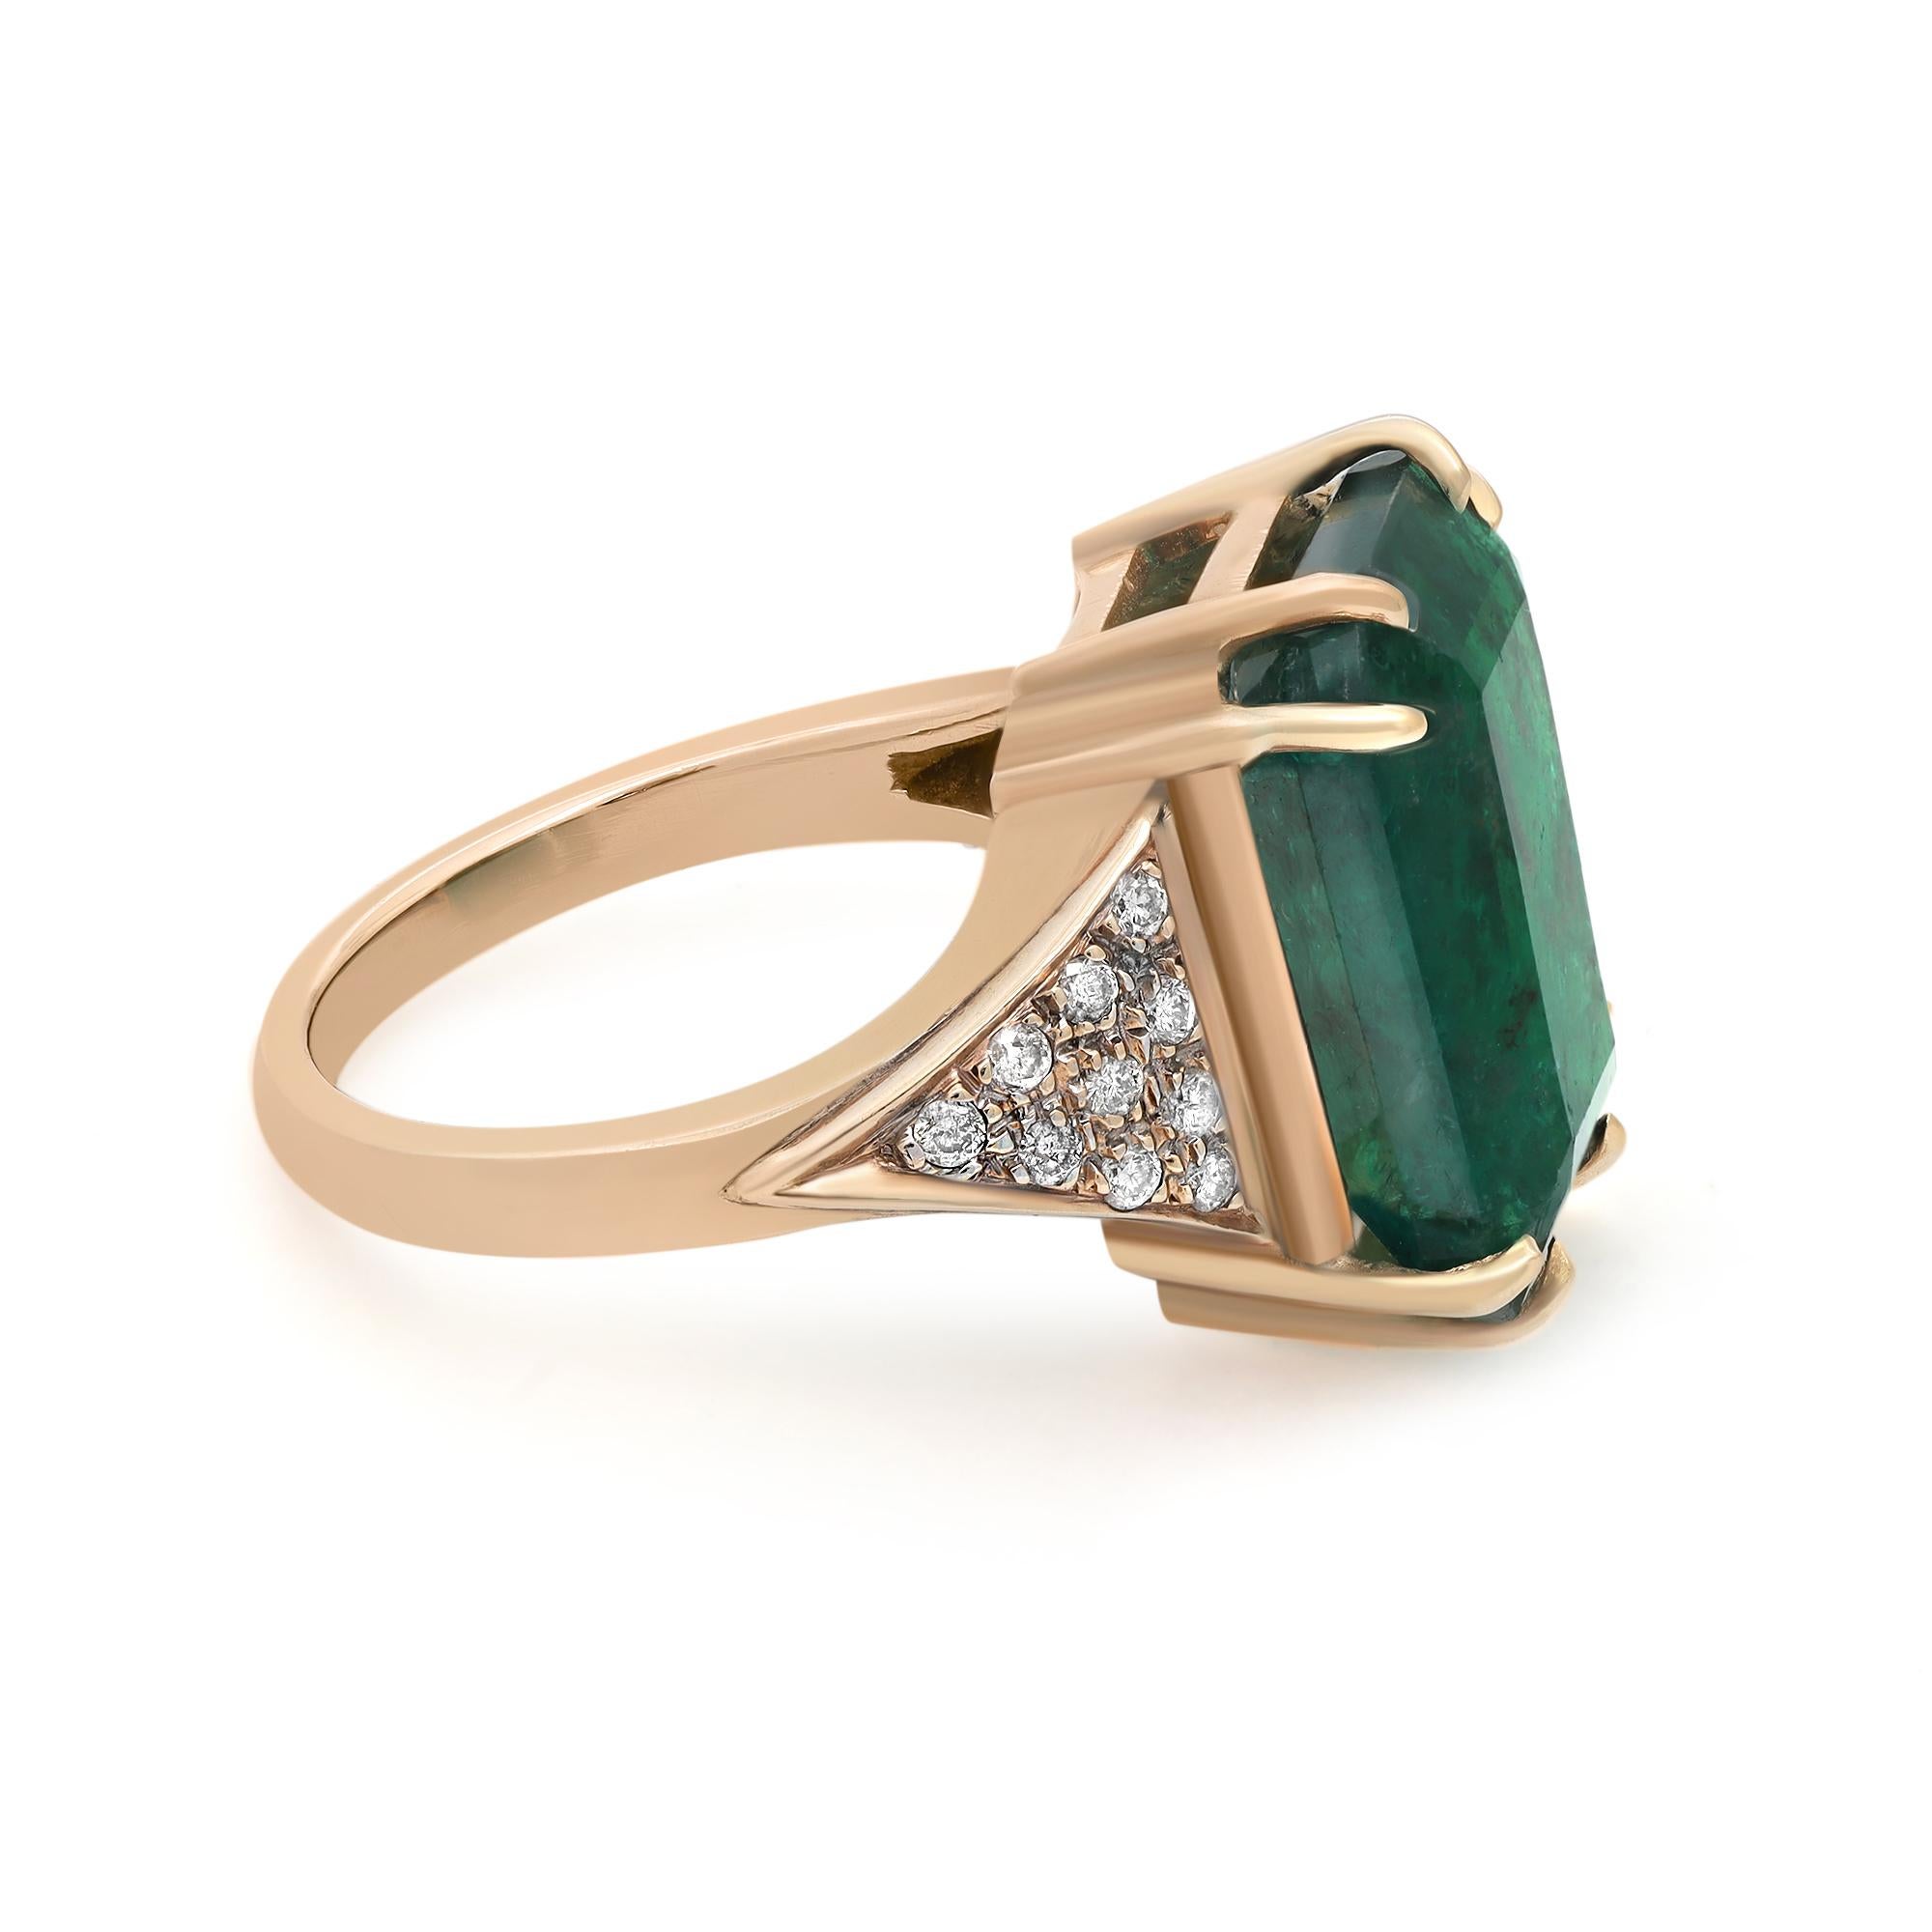 Emerald Cut Rachel Koen 11.06Cttw Emerald & 0.20Cttw Diamond Cocktail Ring 18K Yellow Gold For Sale